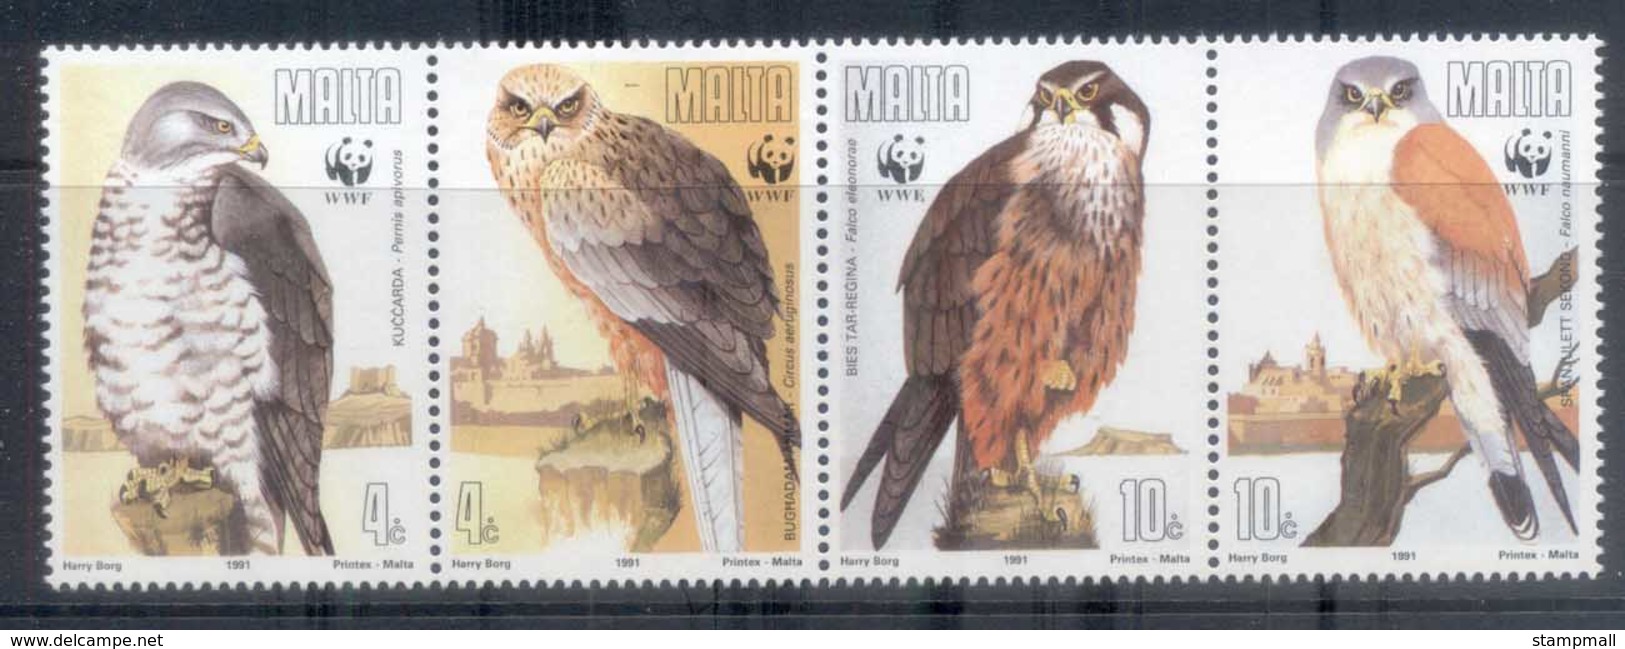 Malta 1991 WWF Endangered Species, Birds Str4 MUH - Malta